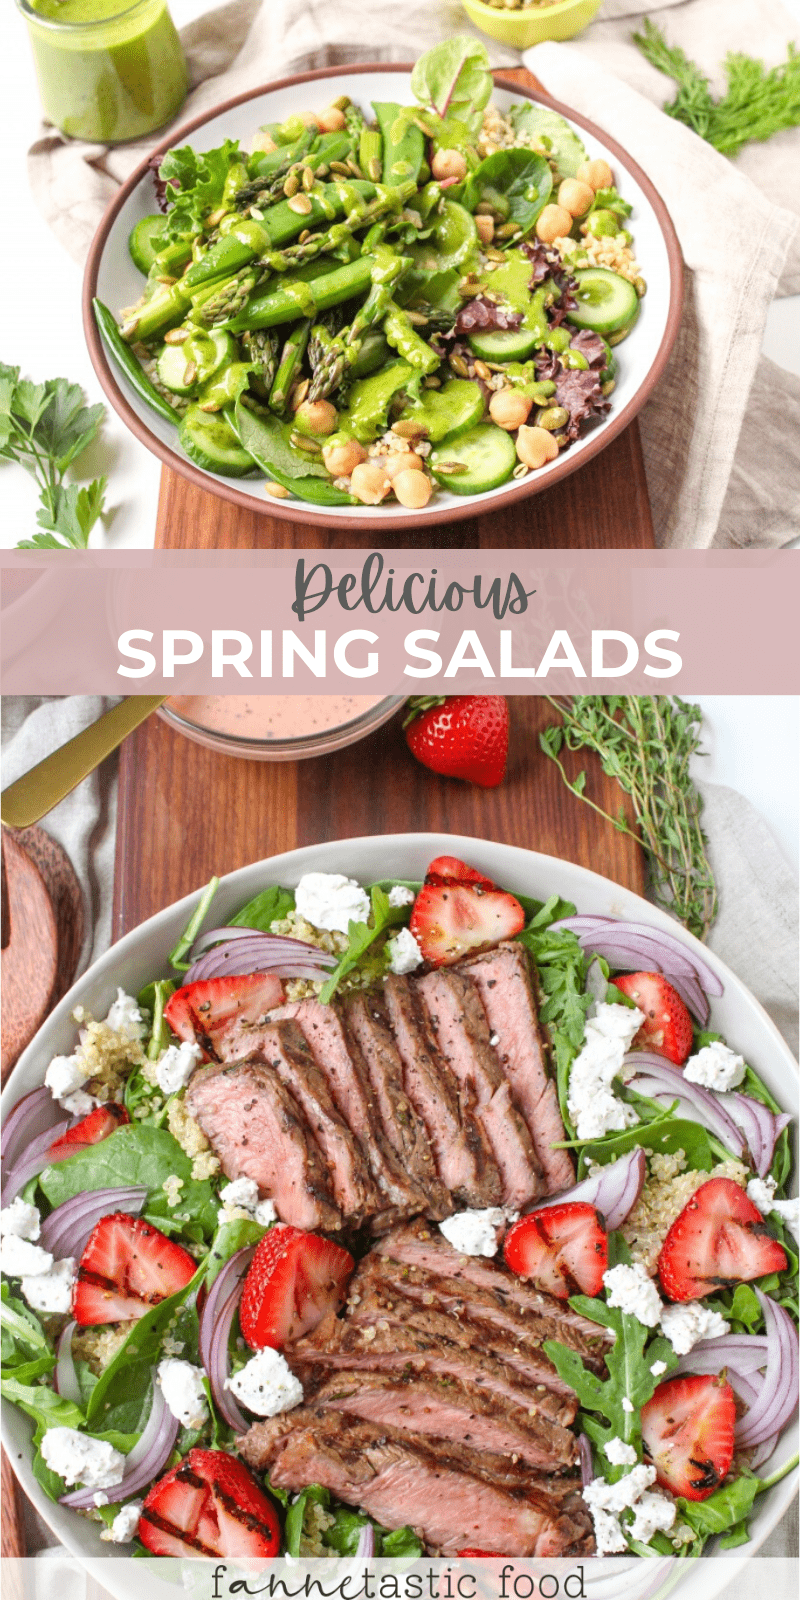 https://www.fannetasticfood.com/wp-content/uploads/2020/04/Spring-Salad-Recipes.png